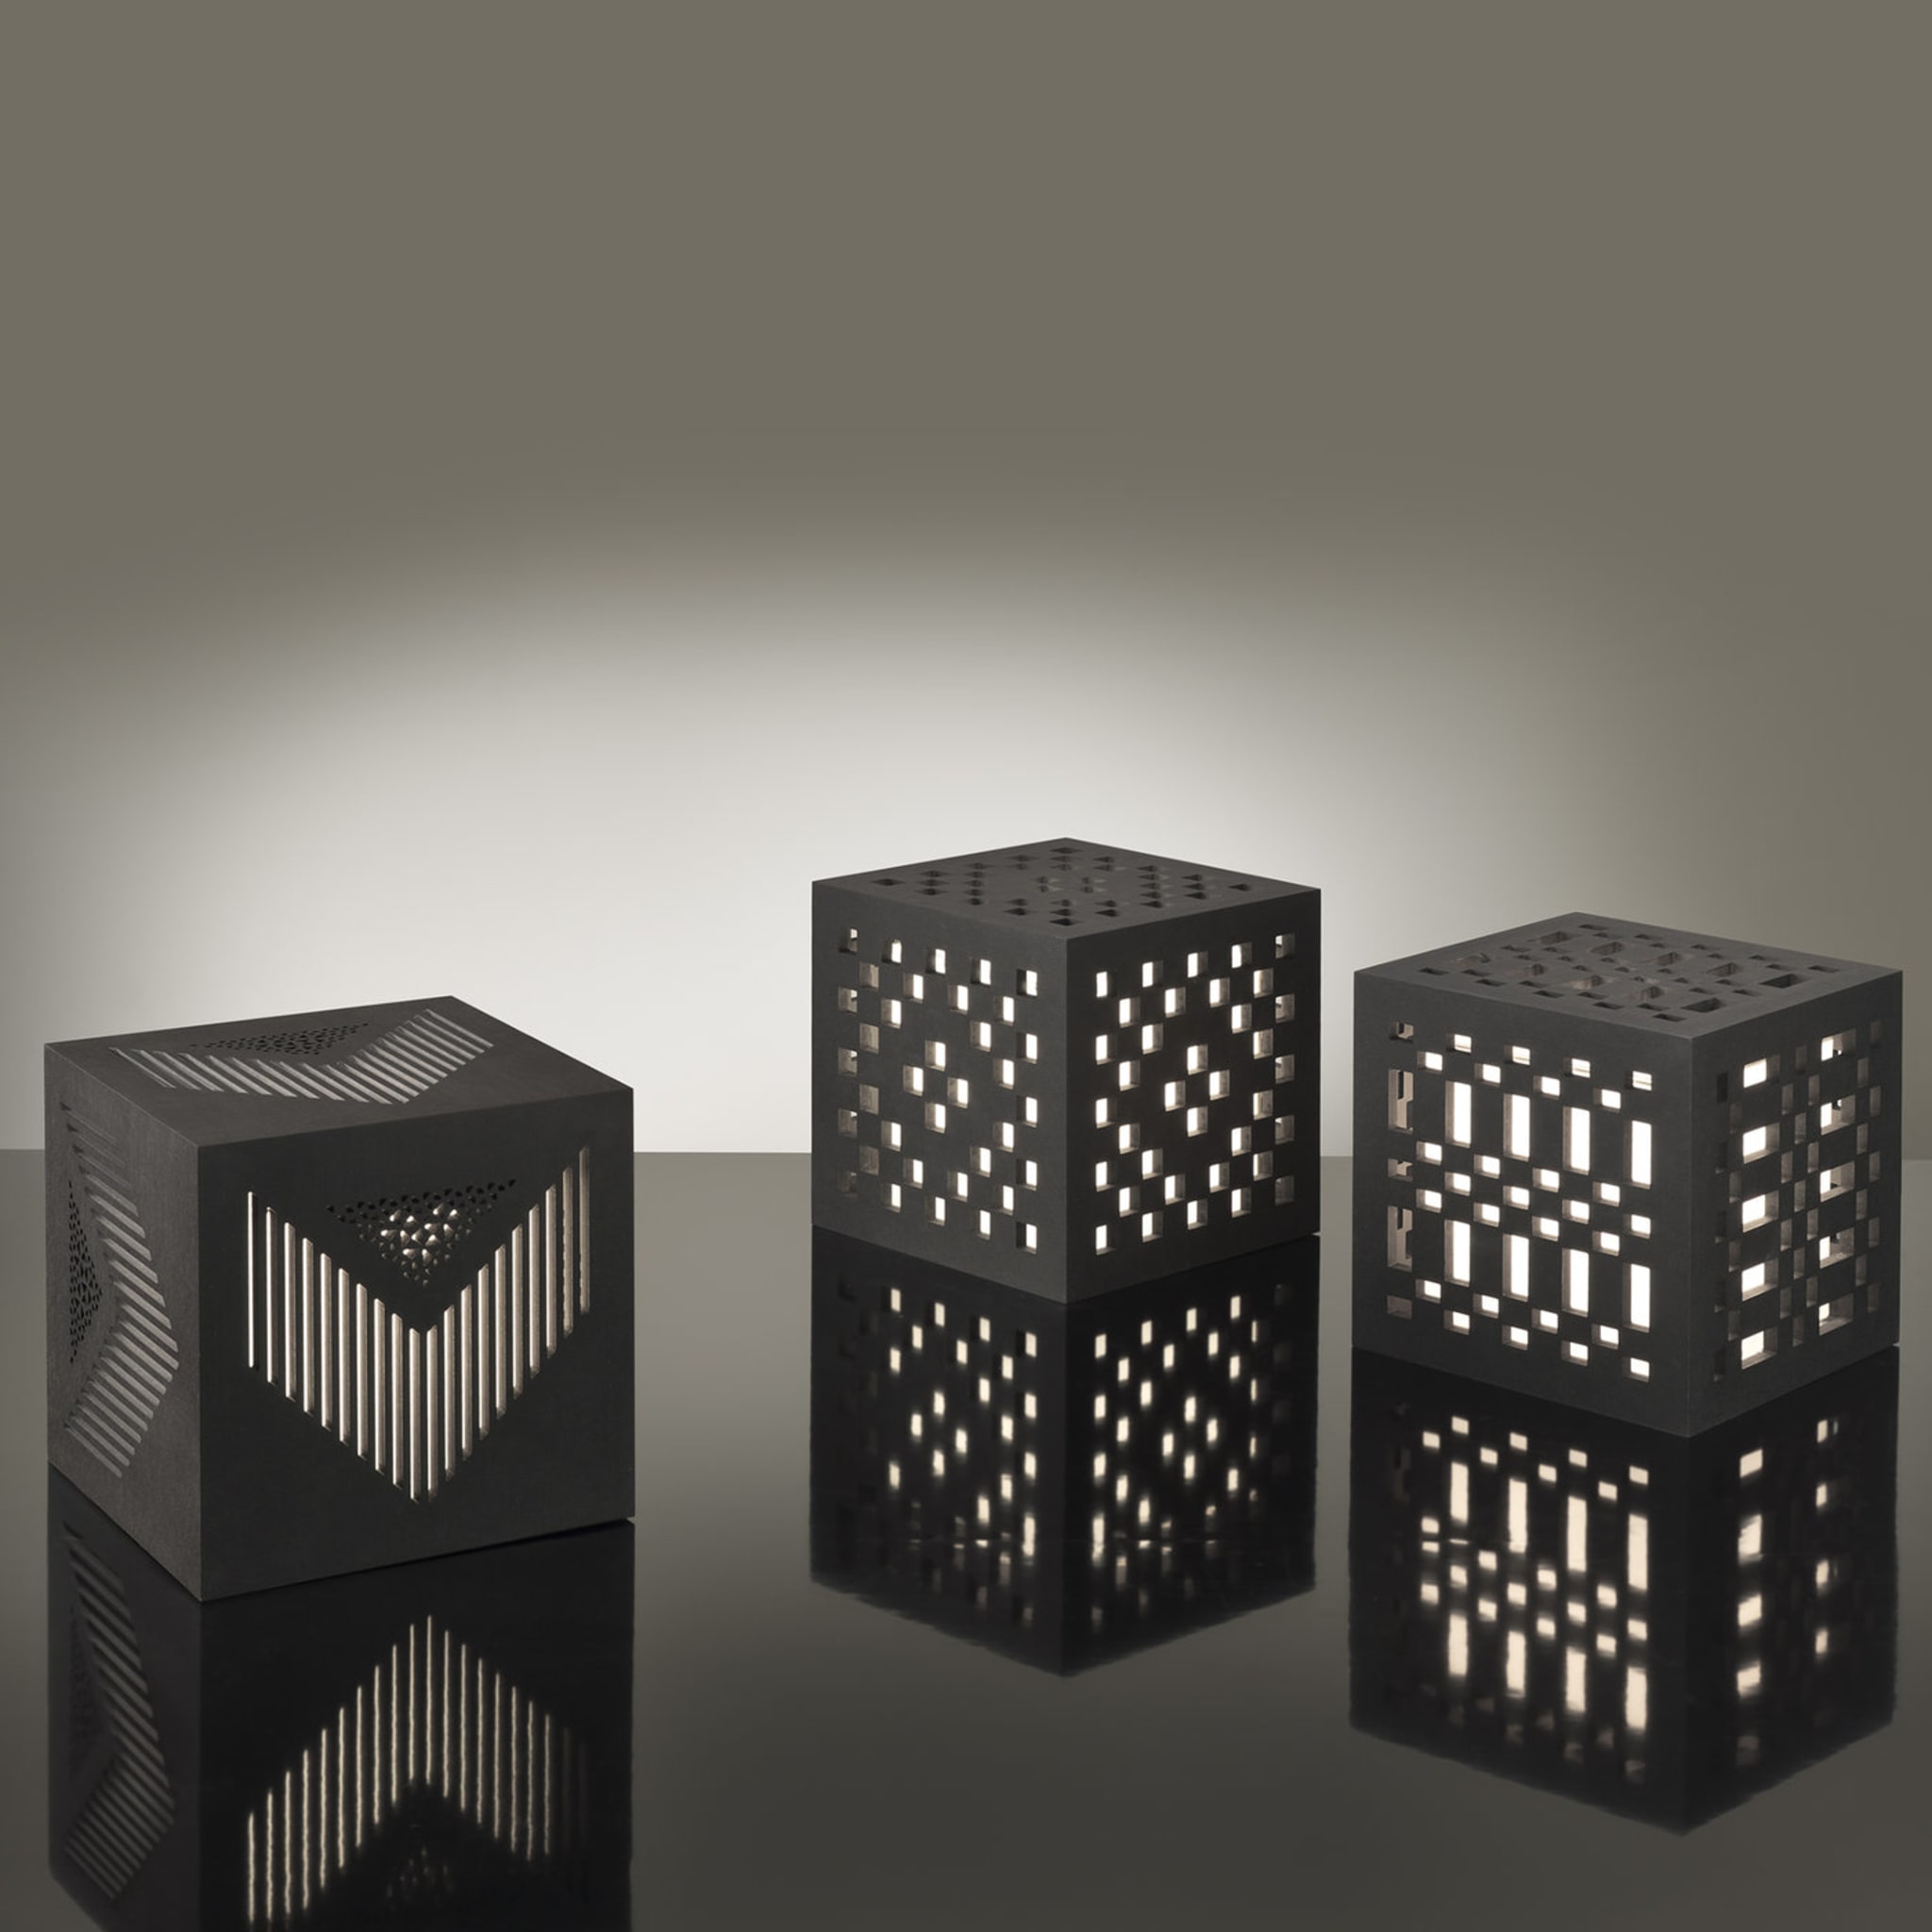 Istella Rombi Cube with Light - Alternative view 1